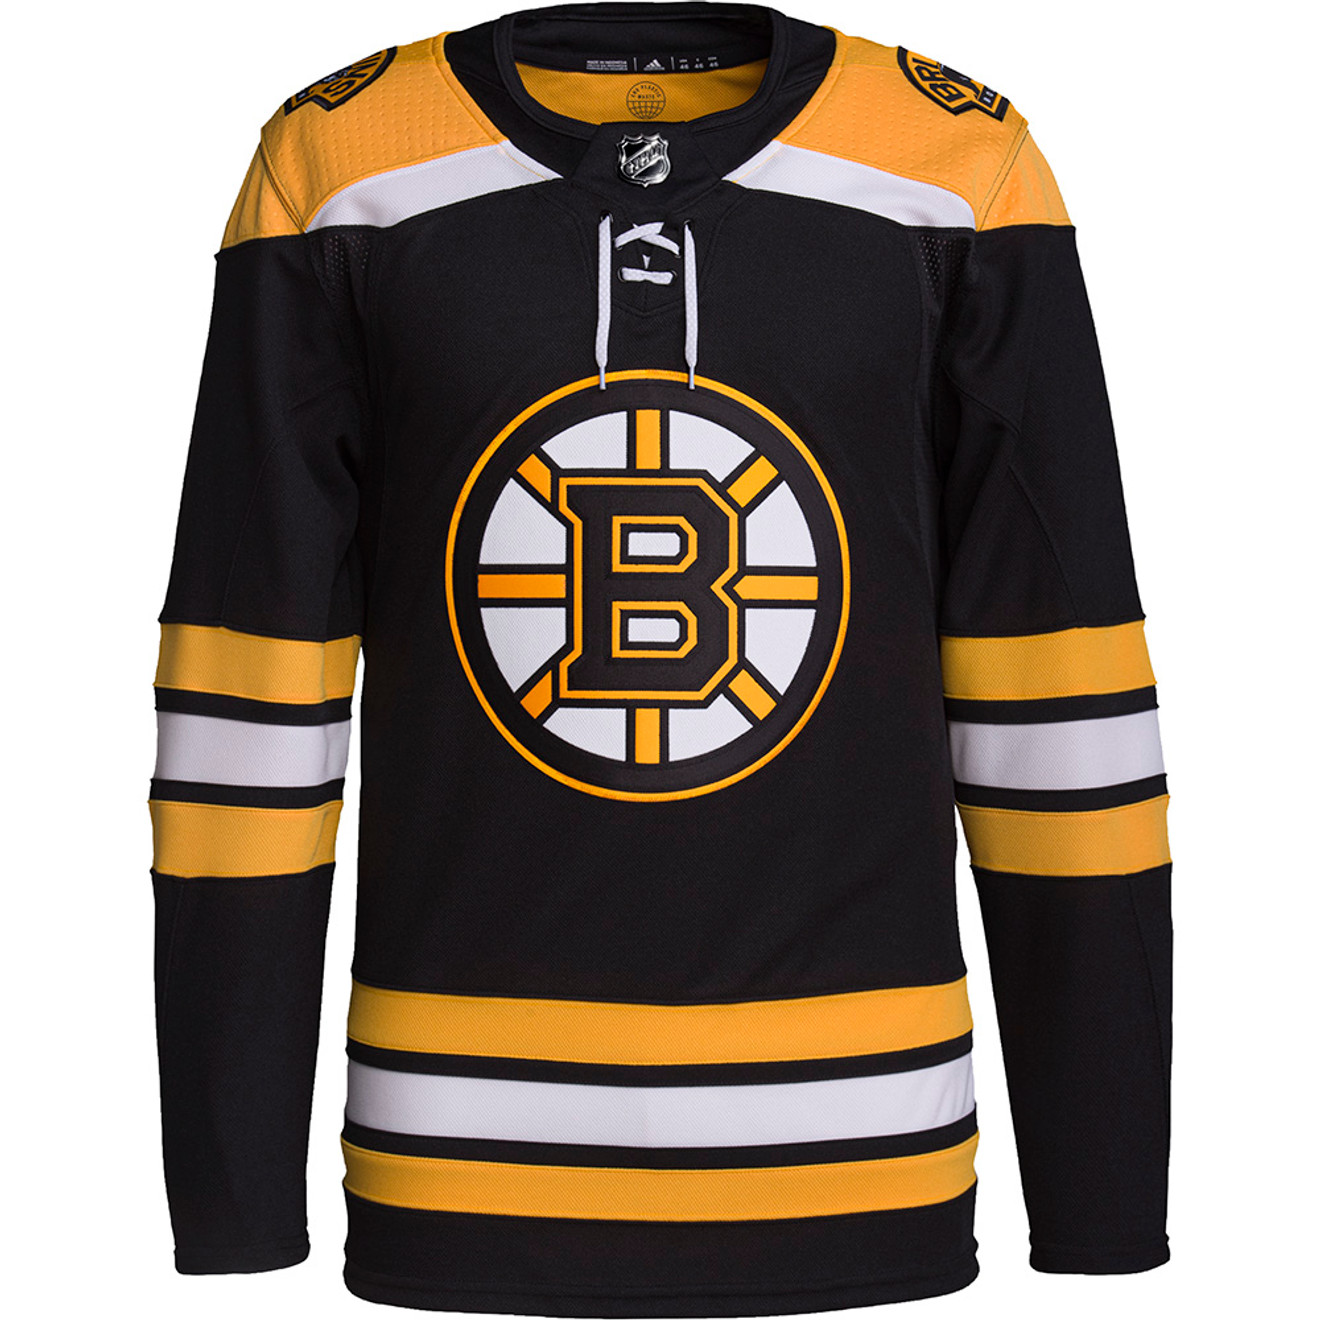 Boston Bruins 10 Inch Bear Team Jersey